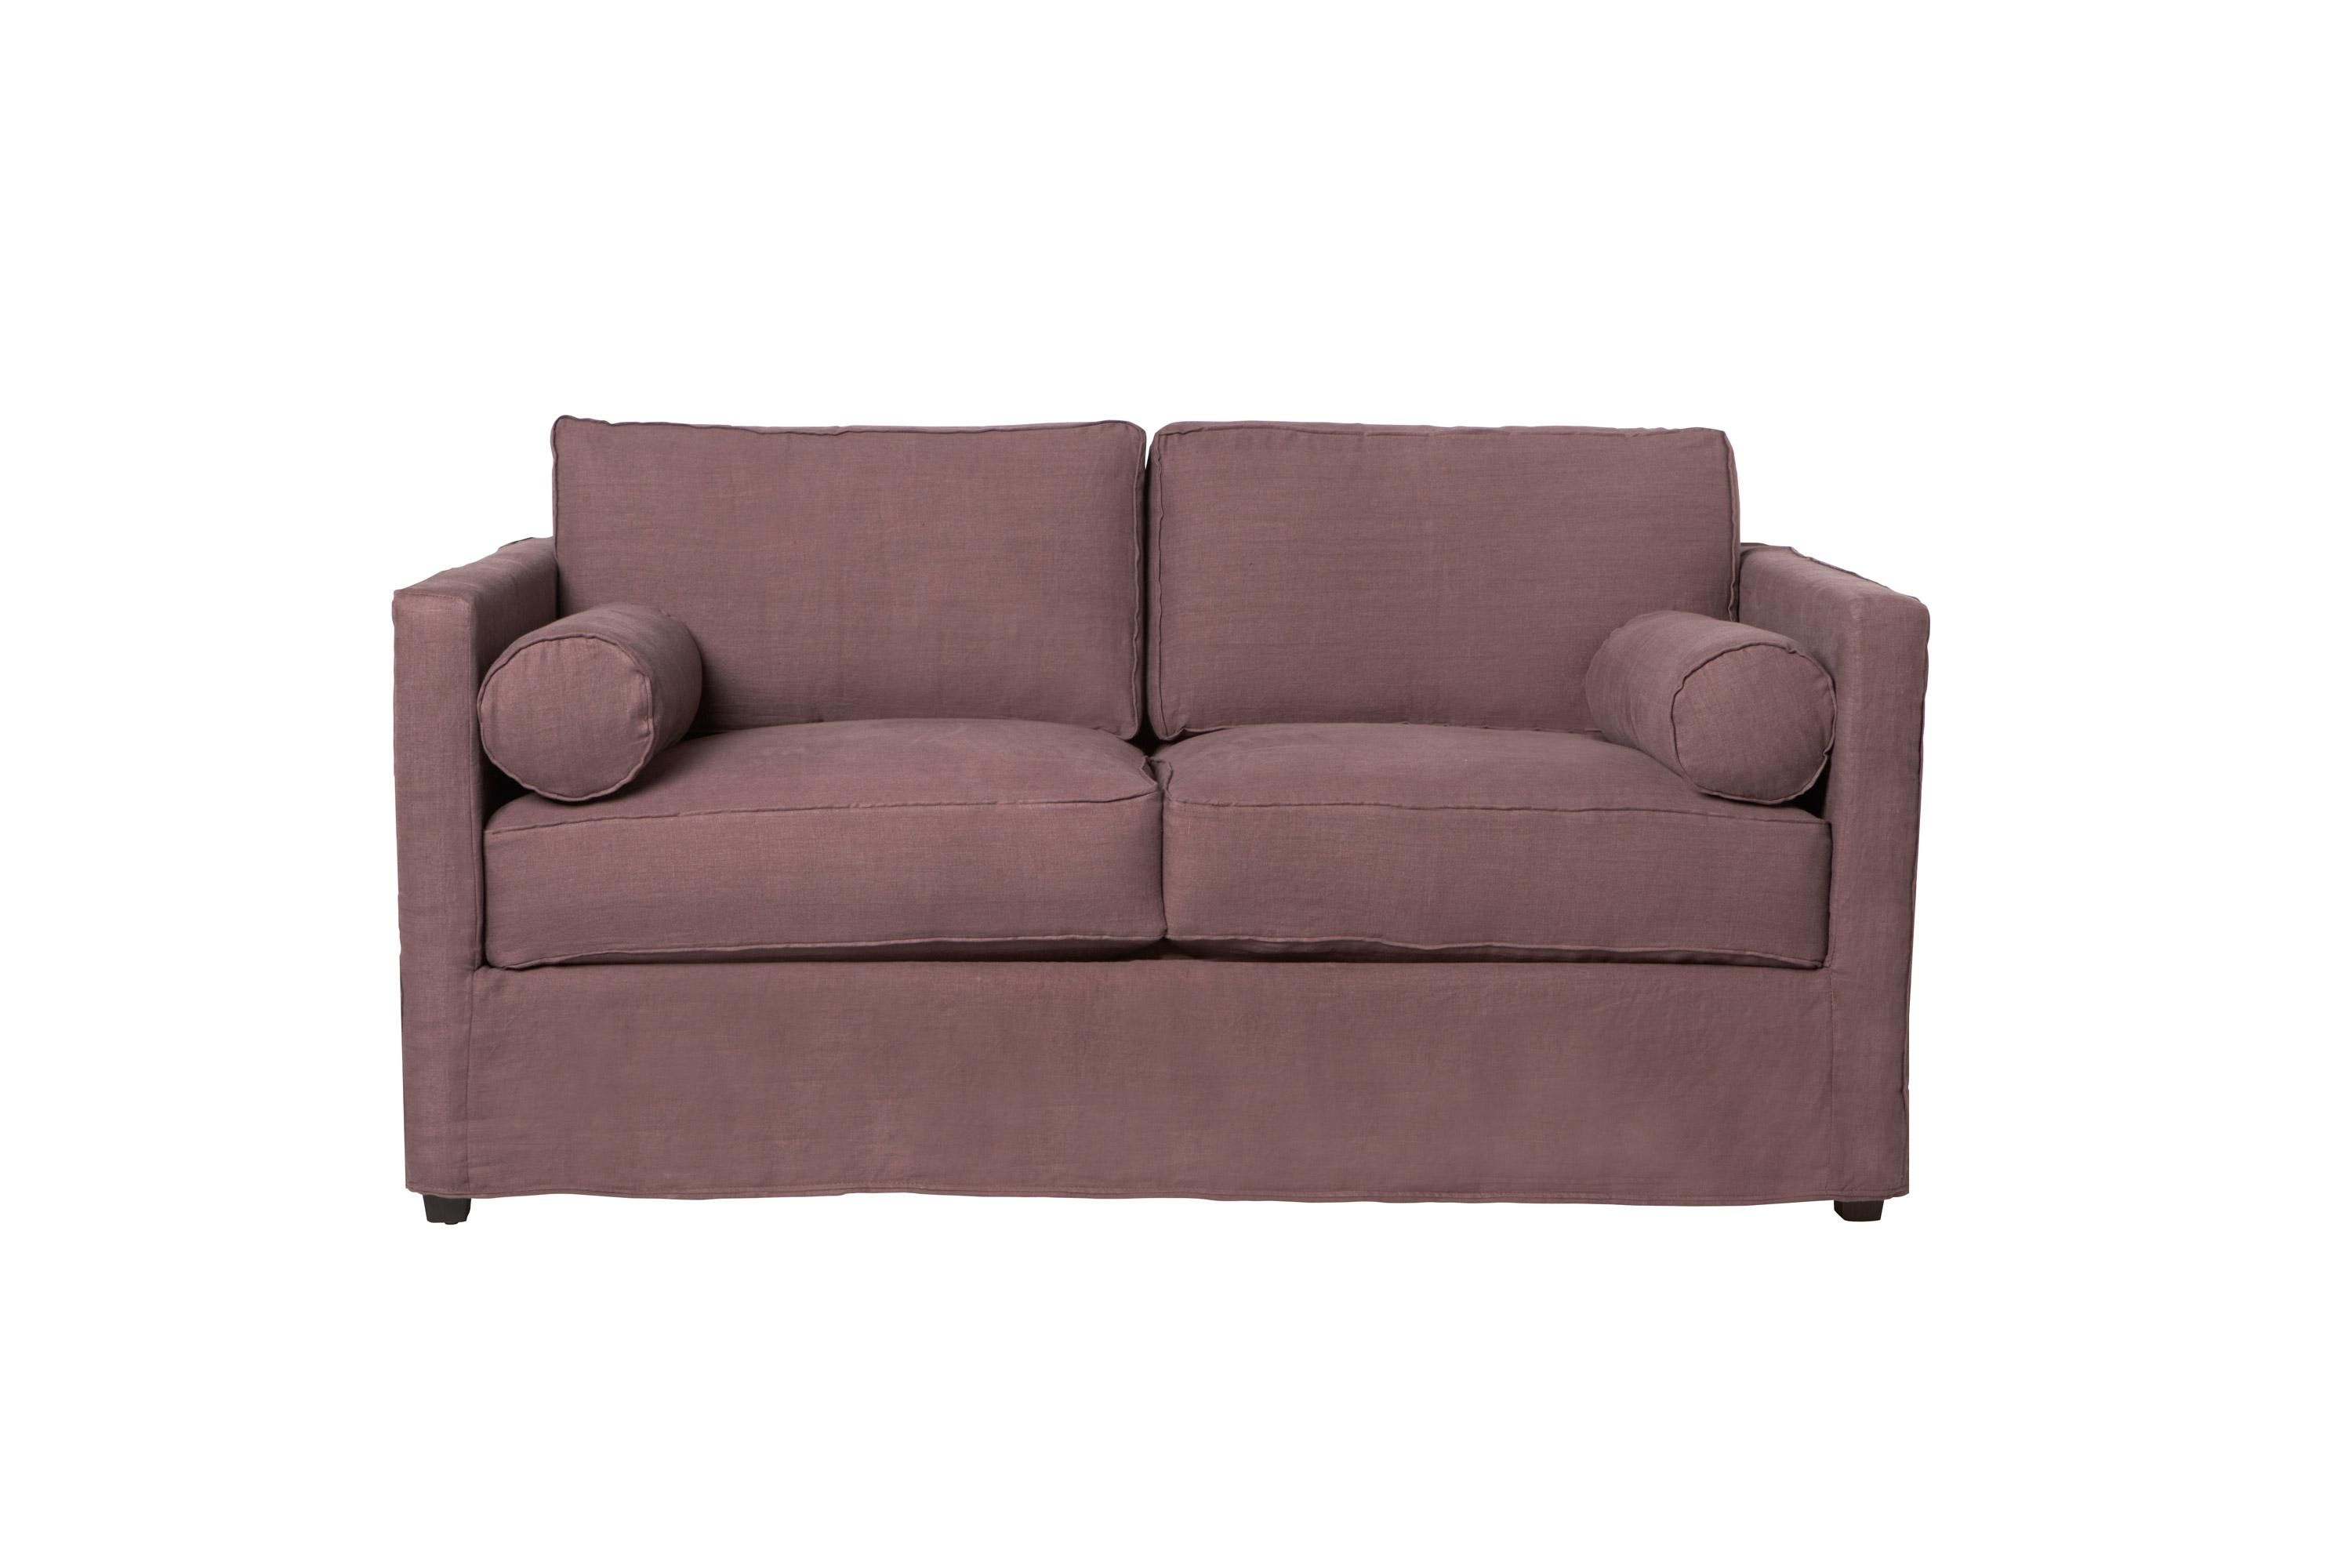 Custom Sofa Cushions Nyc | Cushions Decoration With Regard To Custom Sofas Nyc (View 2 of 20)